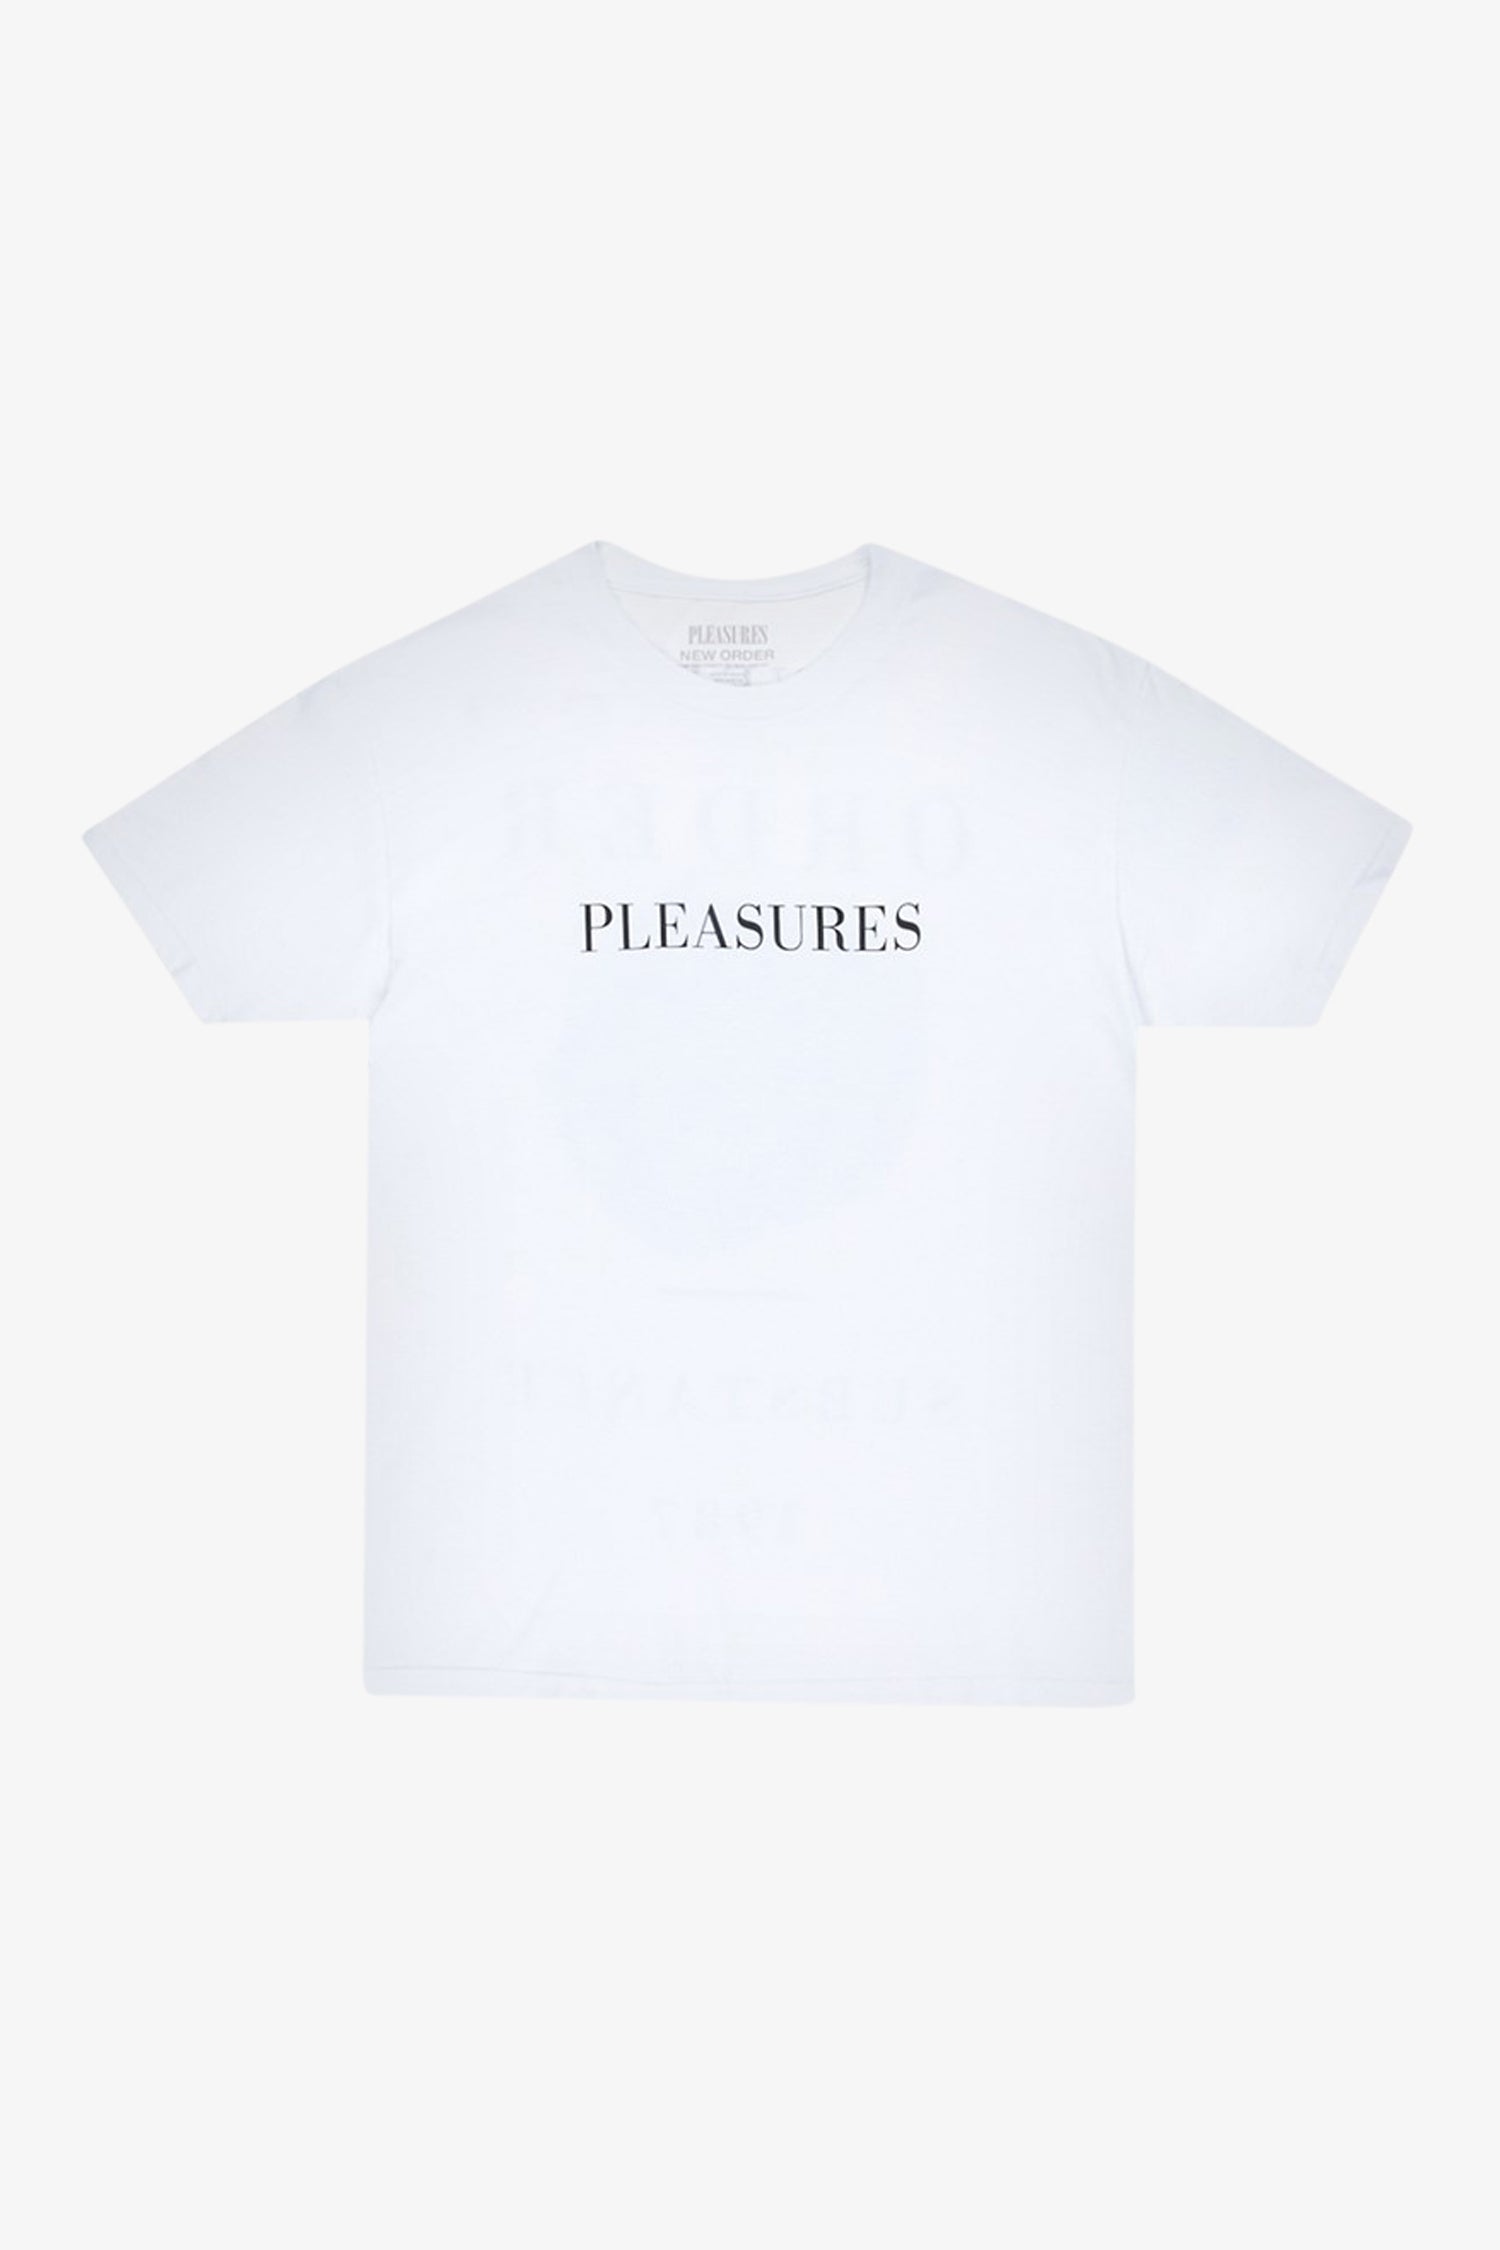 Selectshop FRAME - PLEASURES Substances Tee T-Shirts Dubai